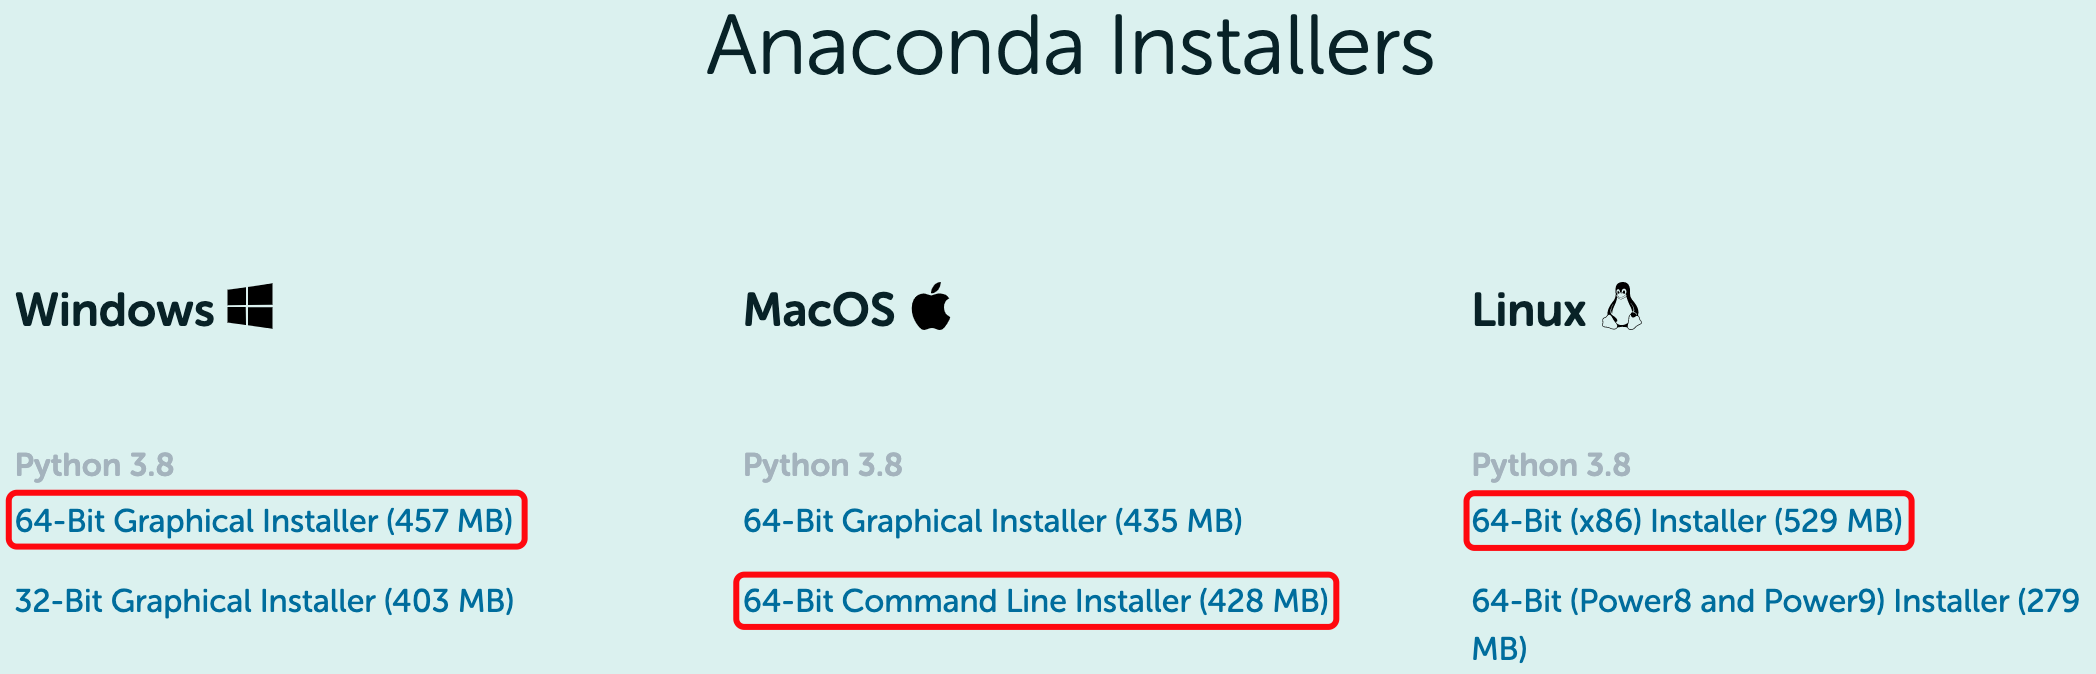 anaconda-download.png